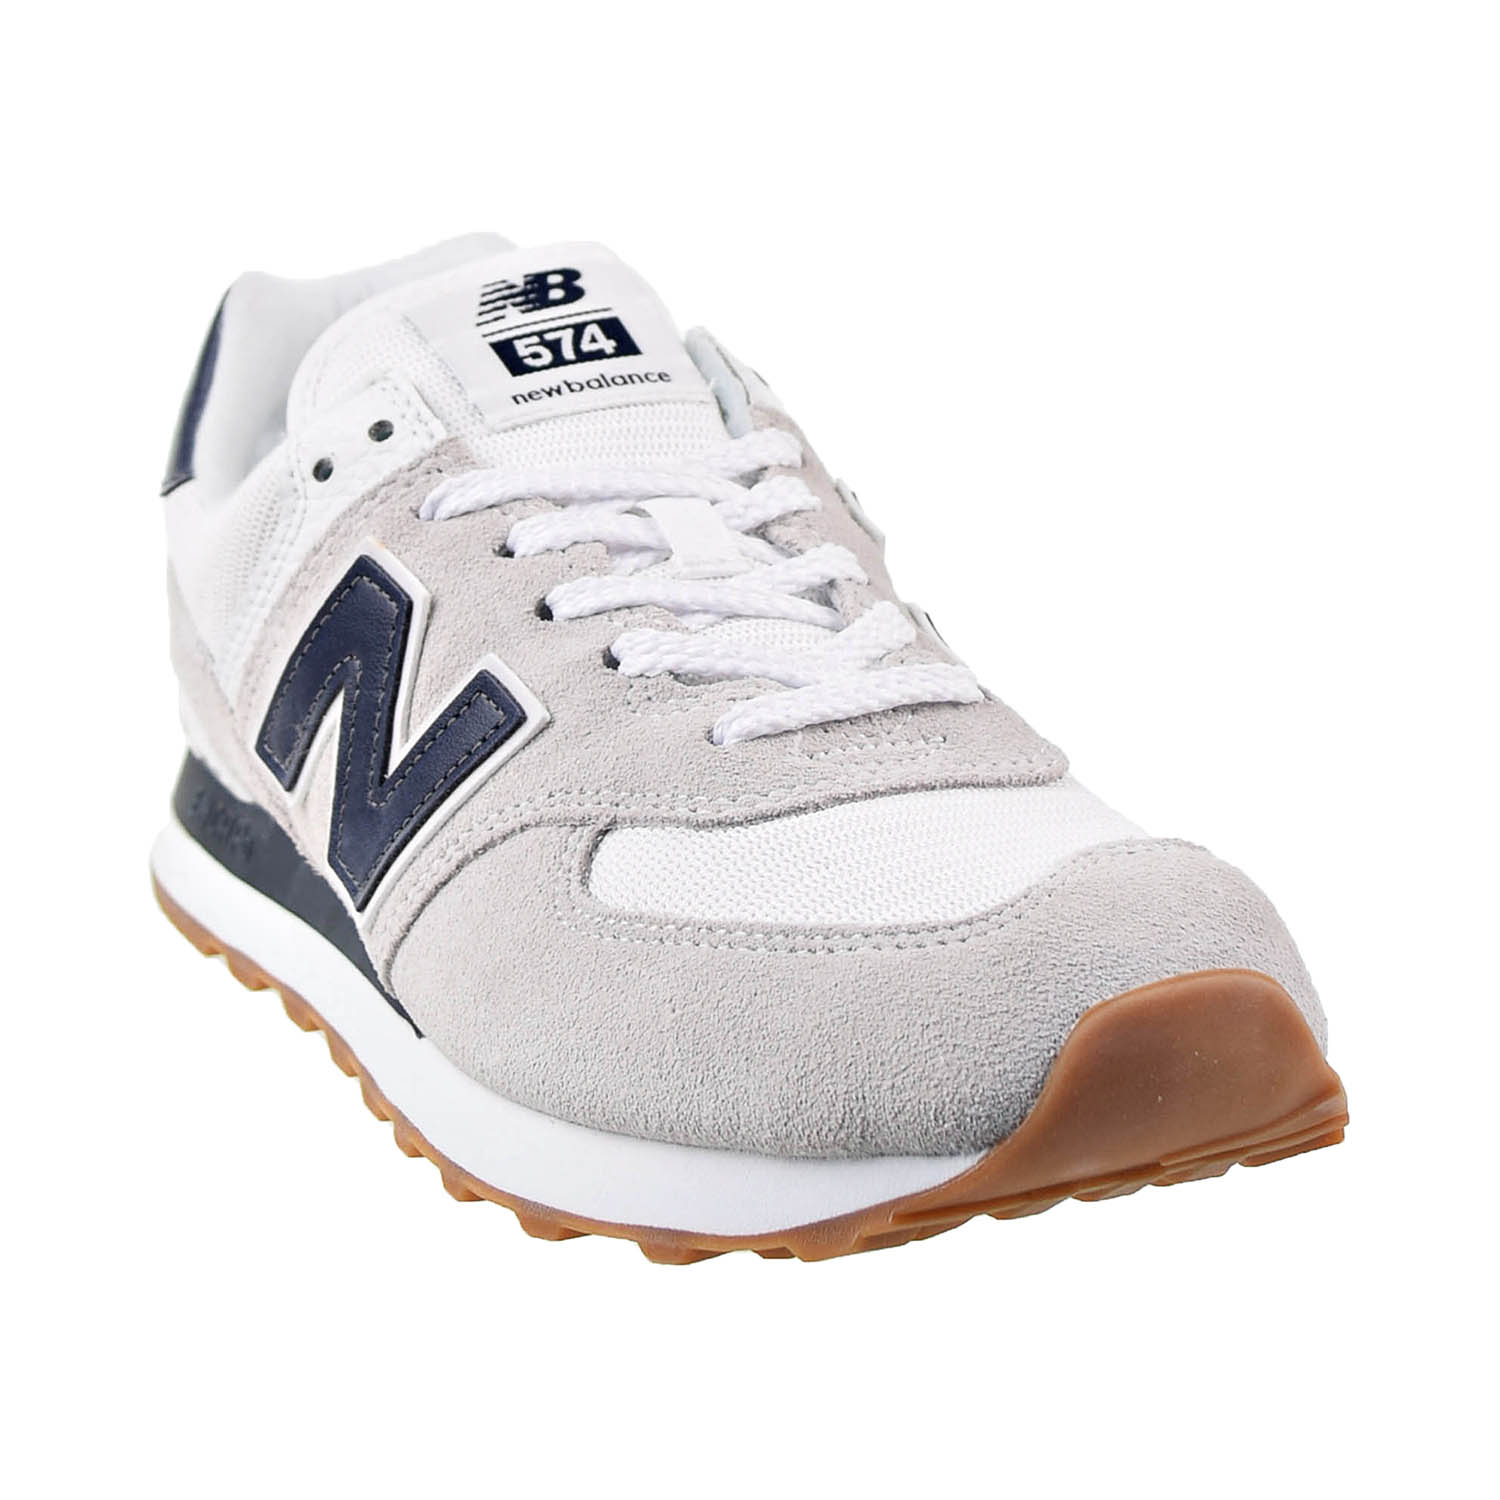 New Balance 574 Men's Shoes White-Navy ml574-tf2